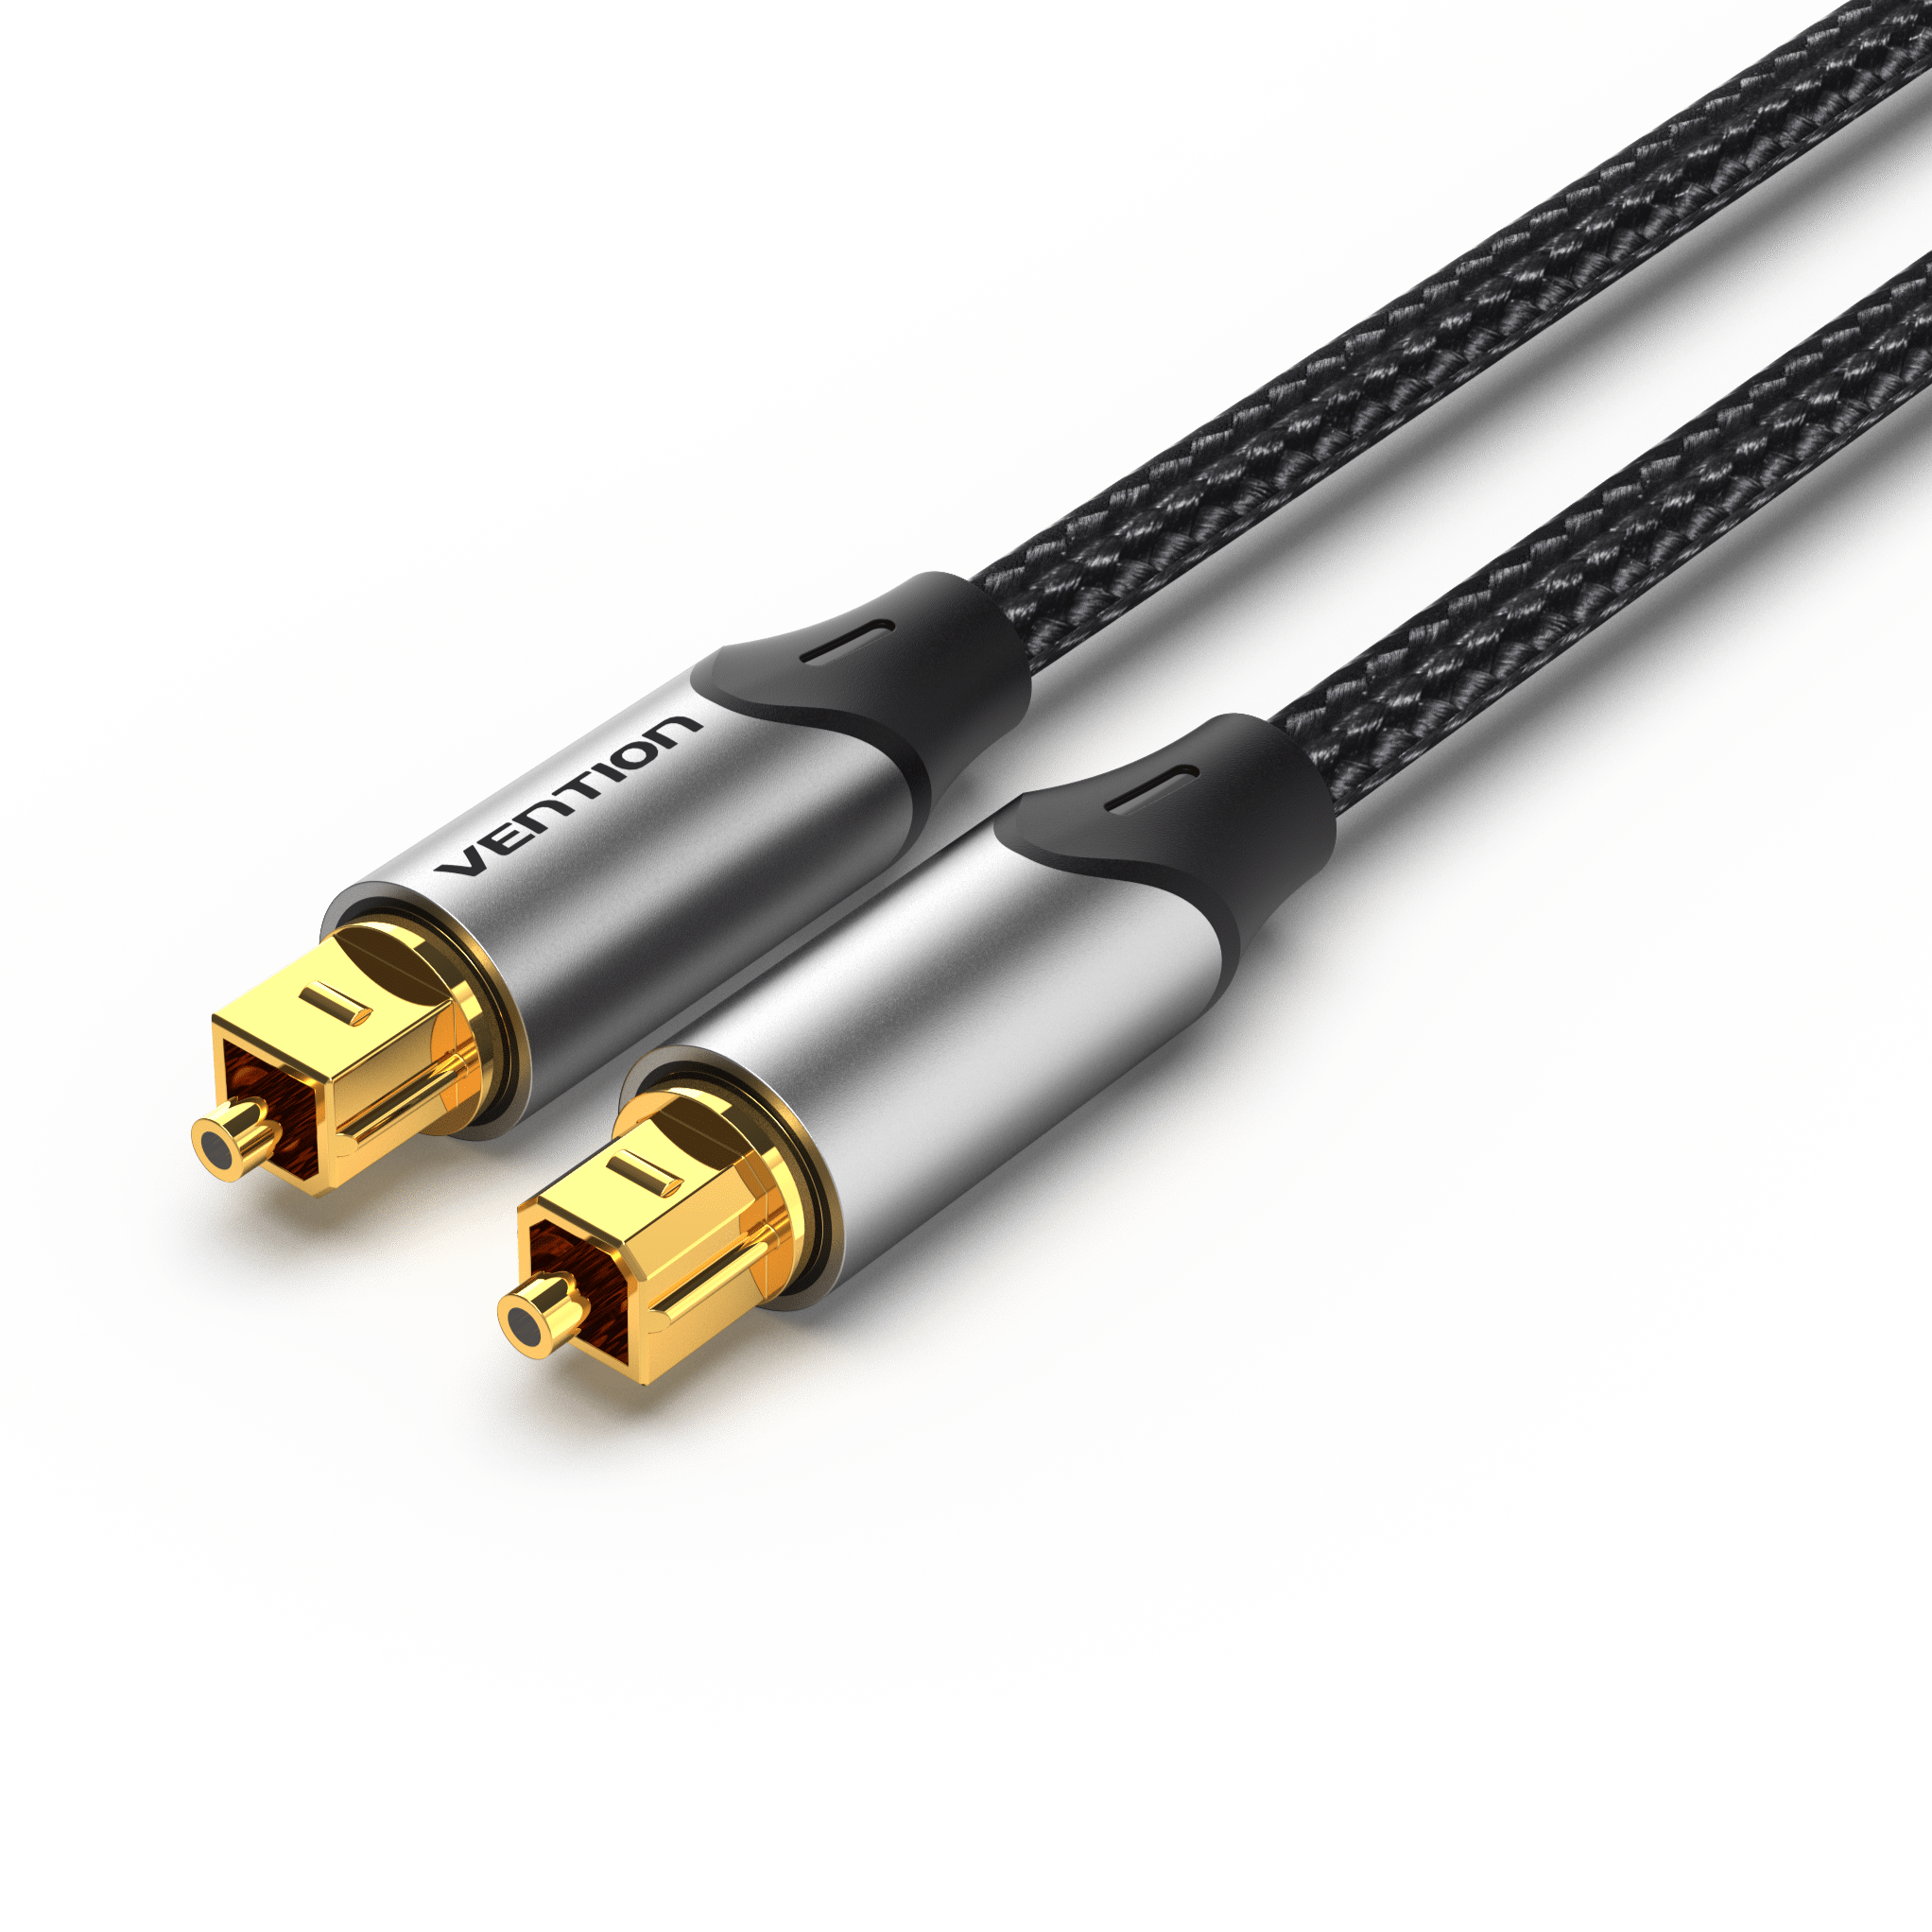 Cable de audio de fibra óptica tipo aleación de aluminio gris